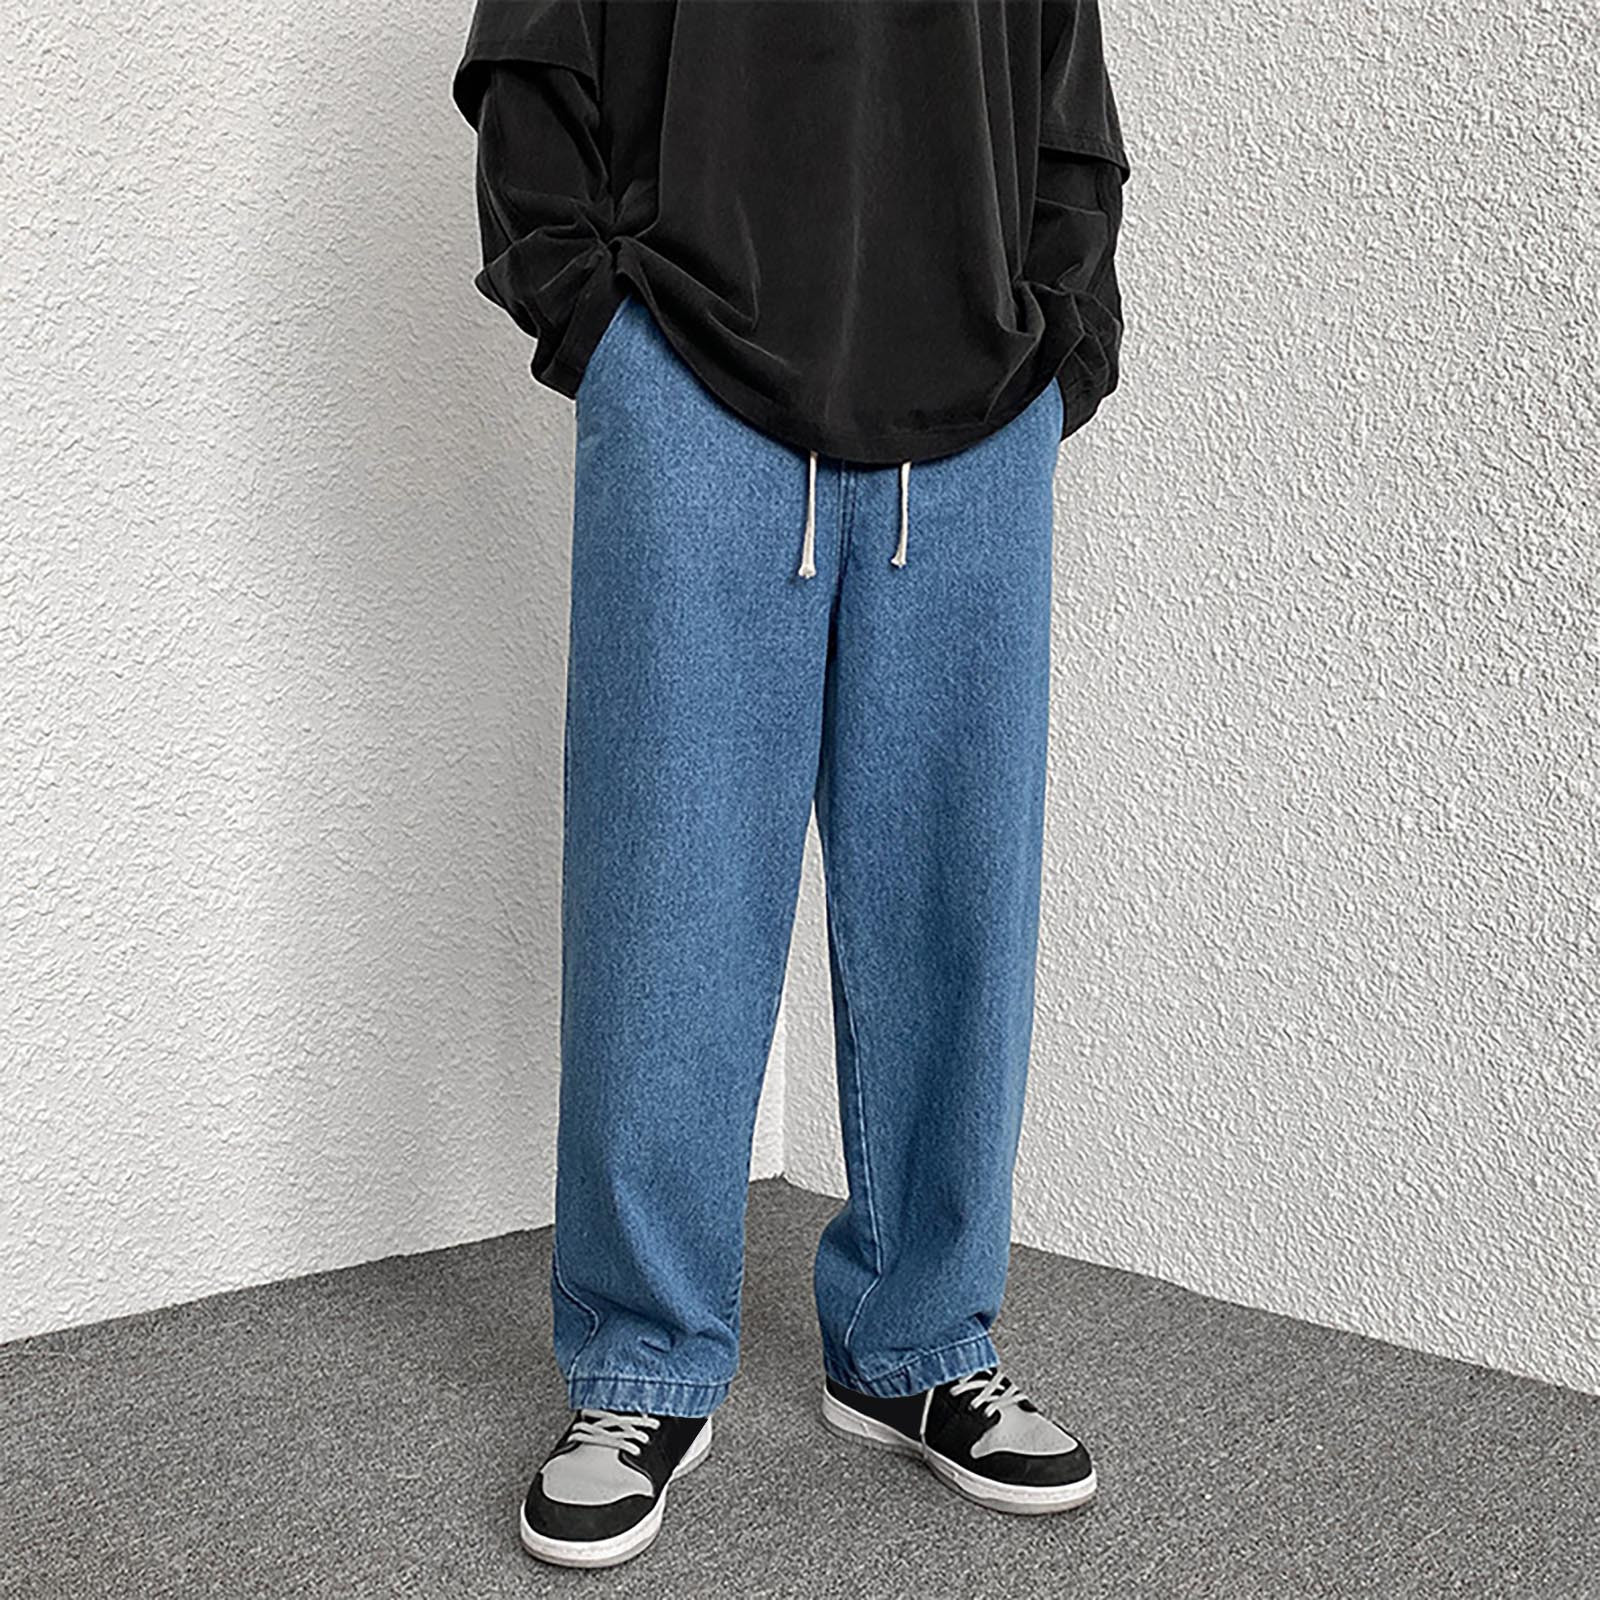 CAMERIARIO Men's Solid Color Denim Loose Jeans, Size M-5XL, Big&Tall ...